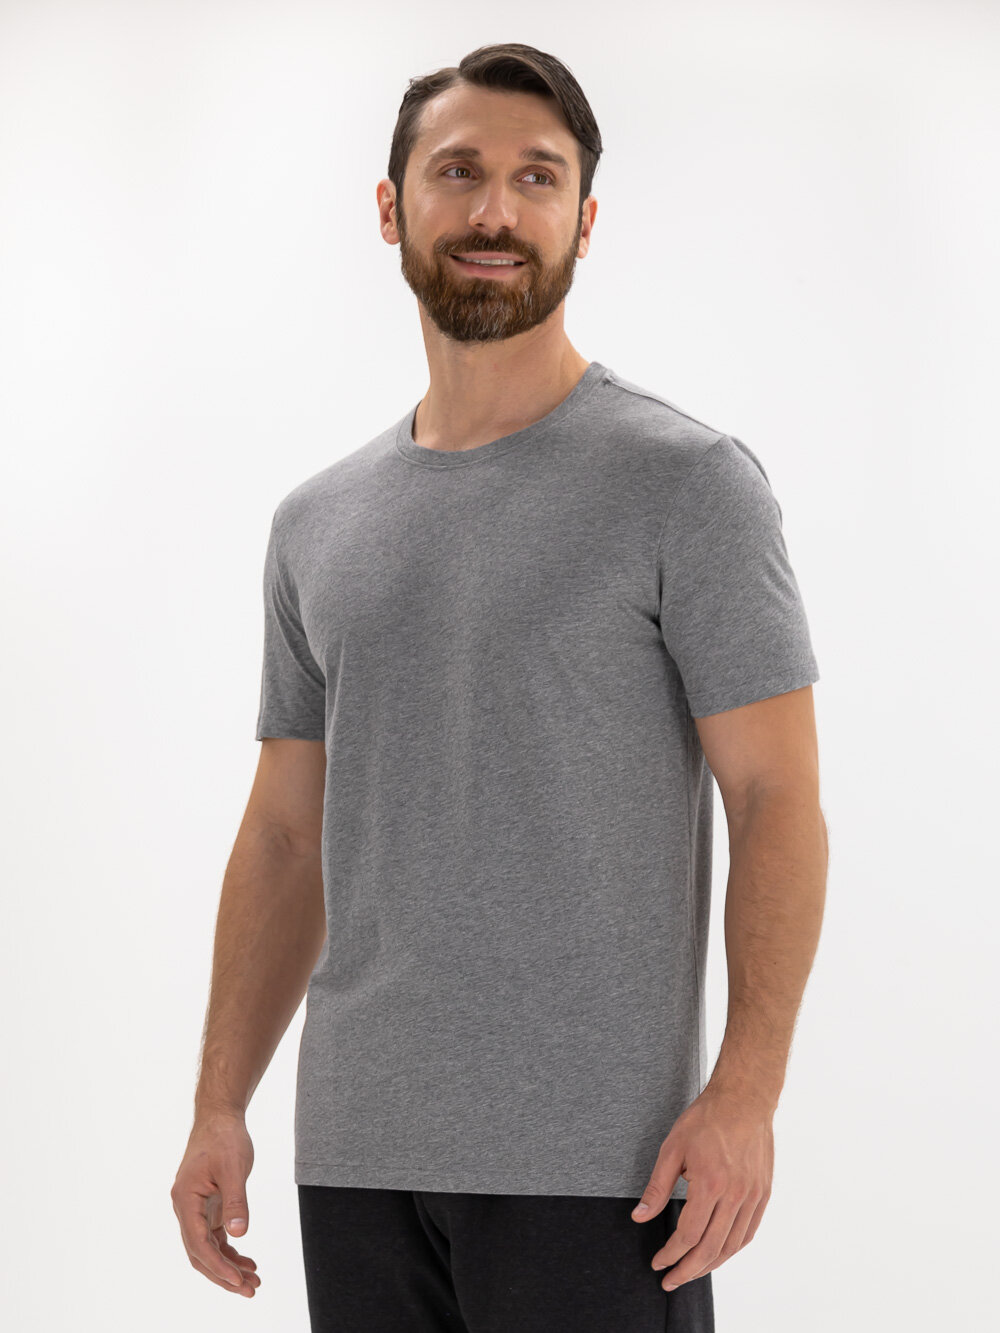 T-shirt + Tanks — Men's Organic Cotton Collection. Made in USA — BGREEN